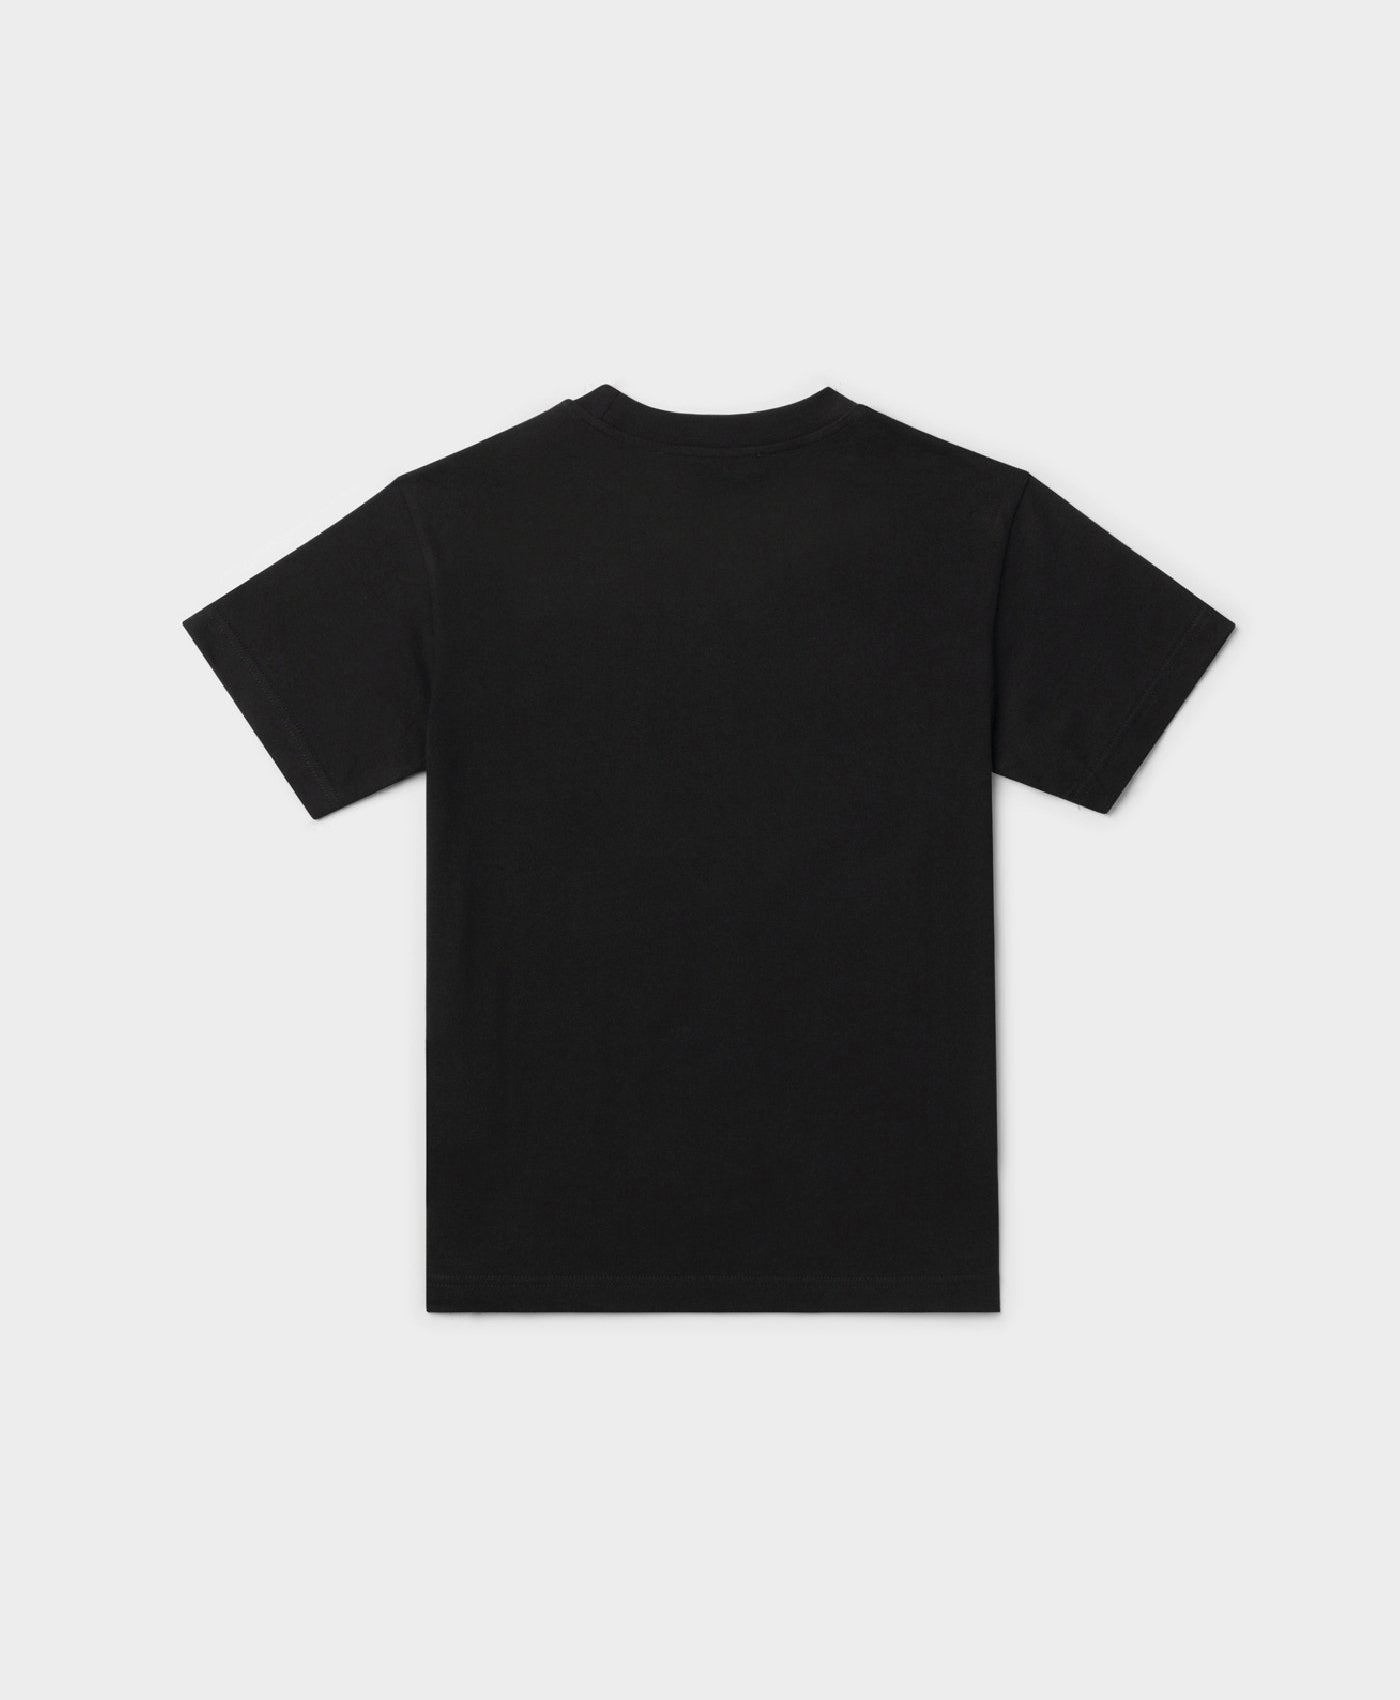 DP - Black Melesse T-Shirt - Packshot - Rear